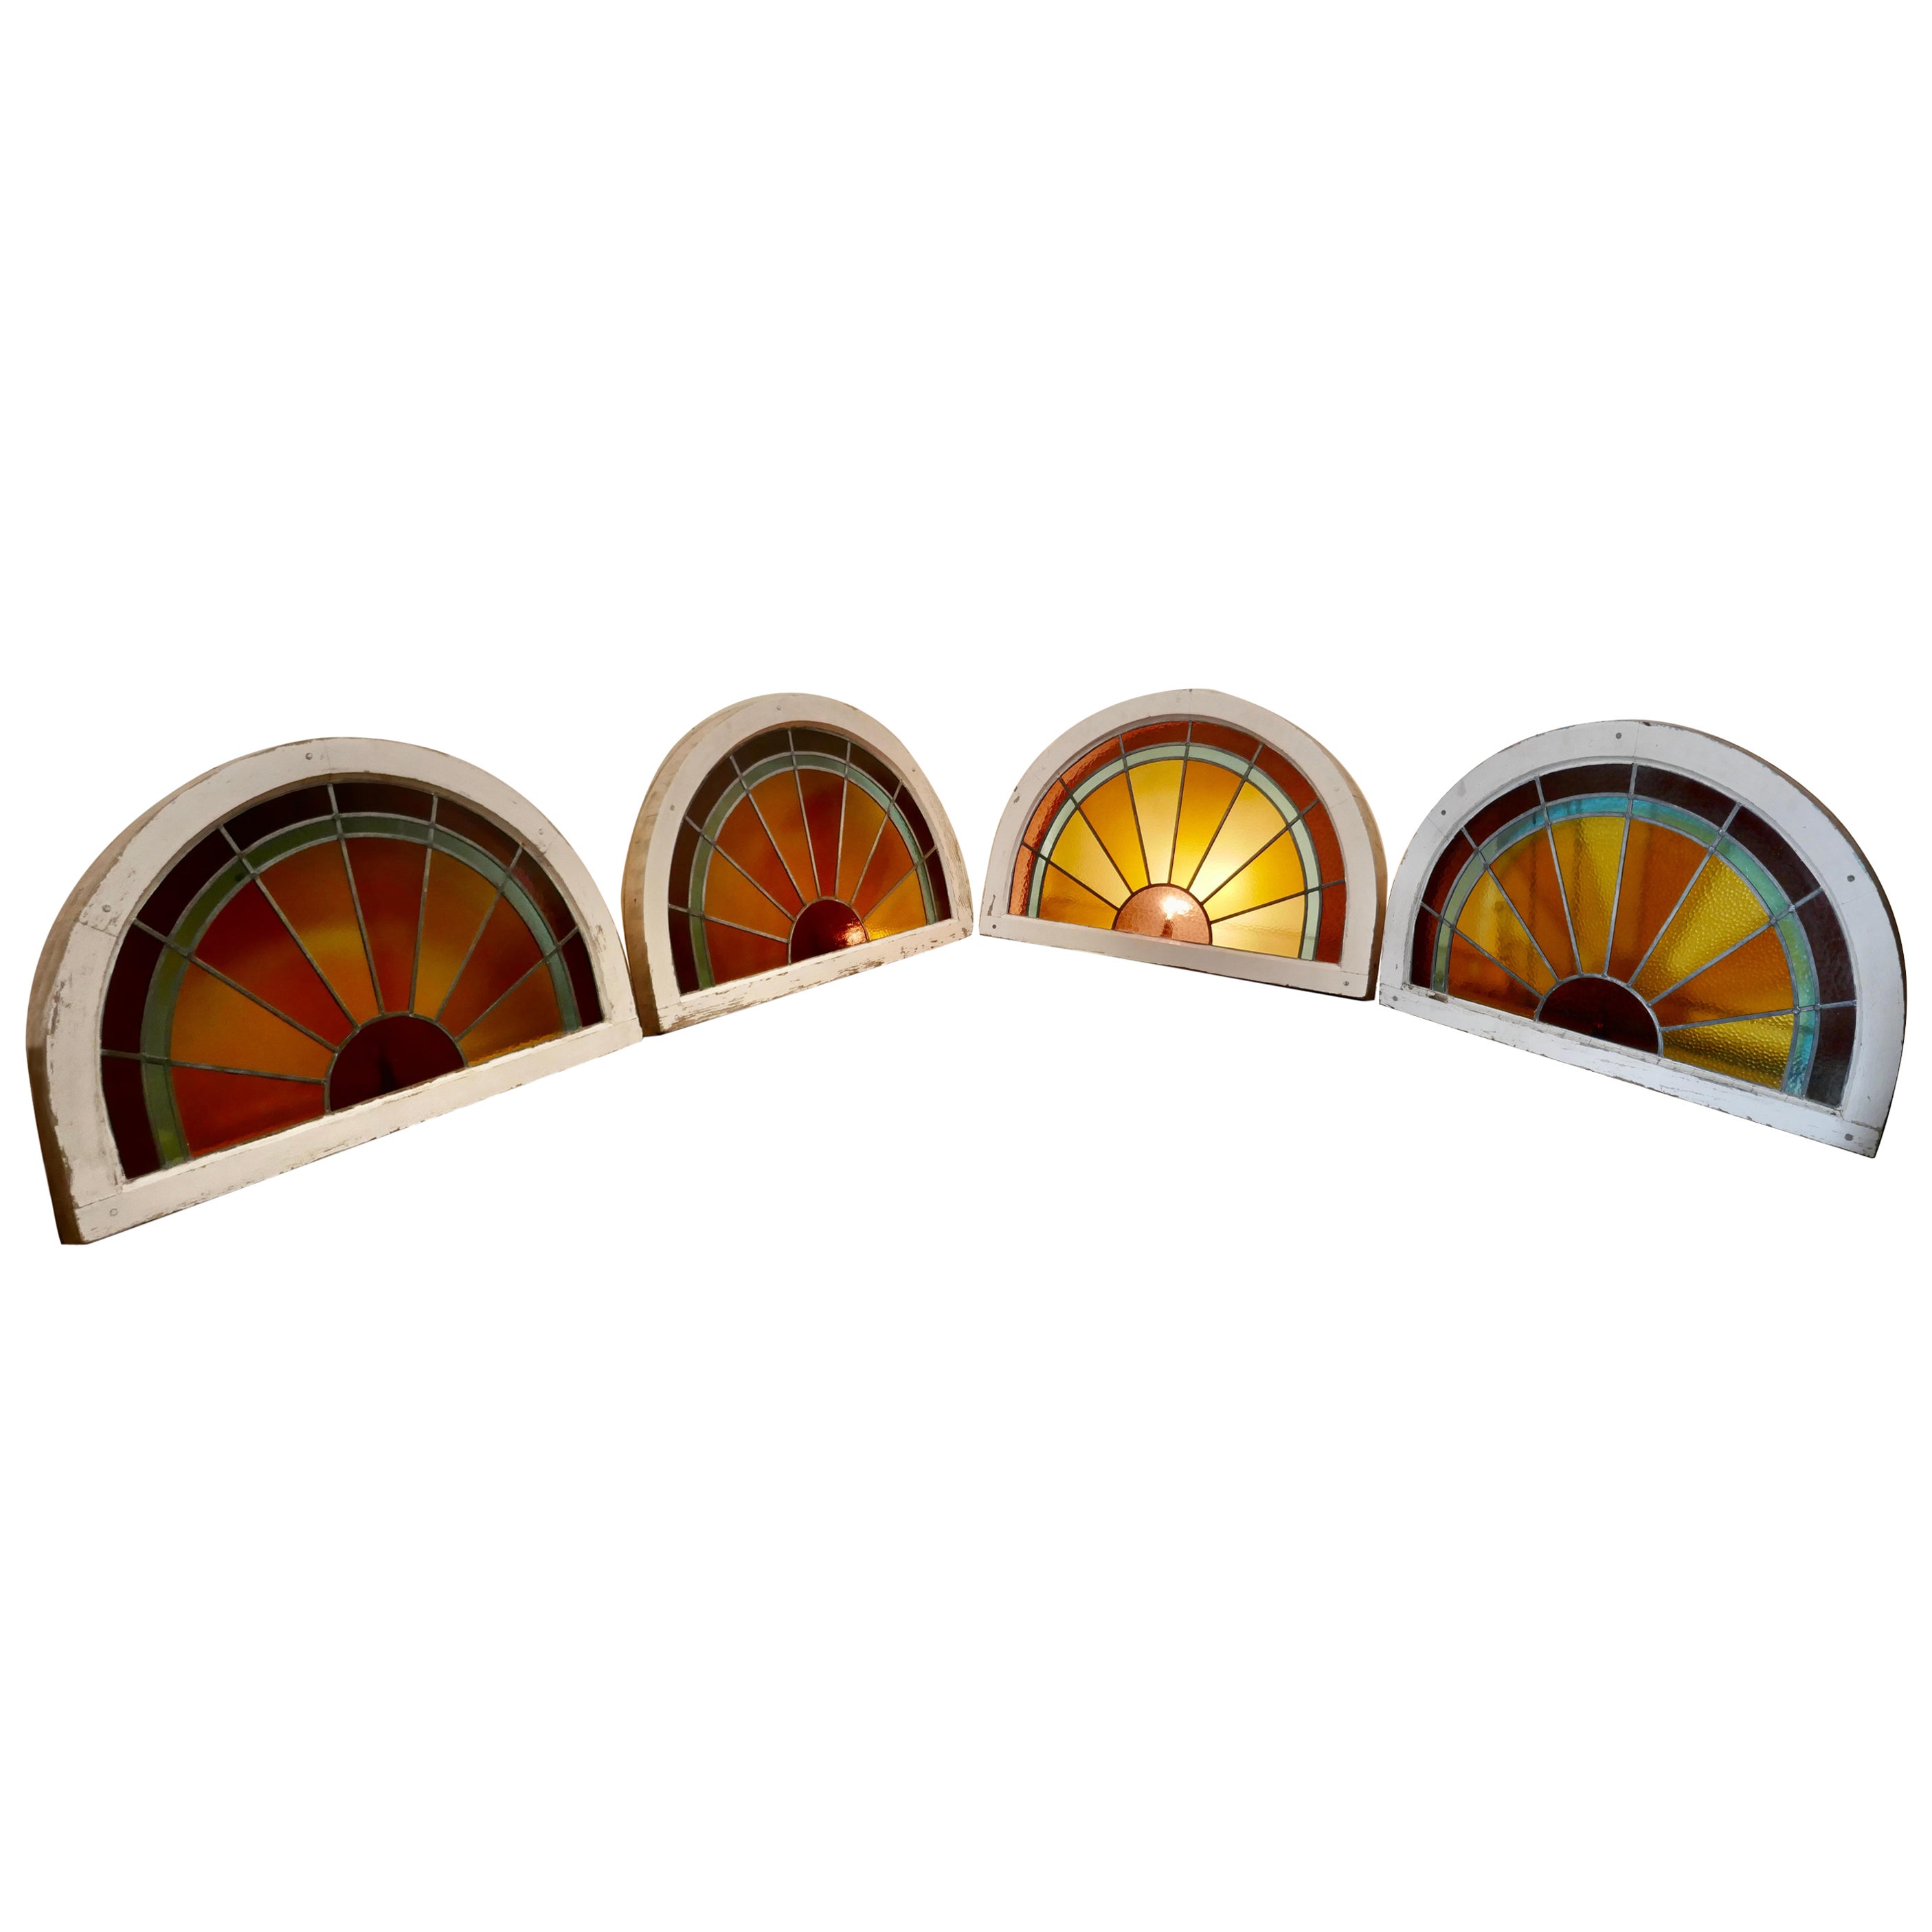 Set of 4 Large Art Deco Arched Sunburst Stained Glass Windows